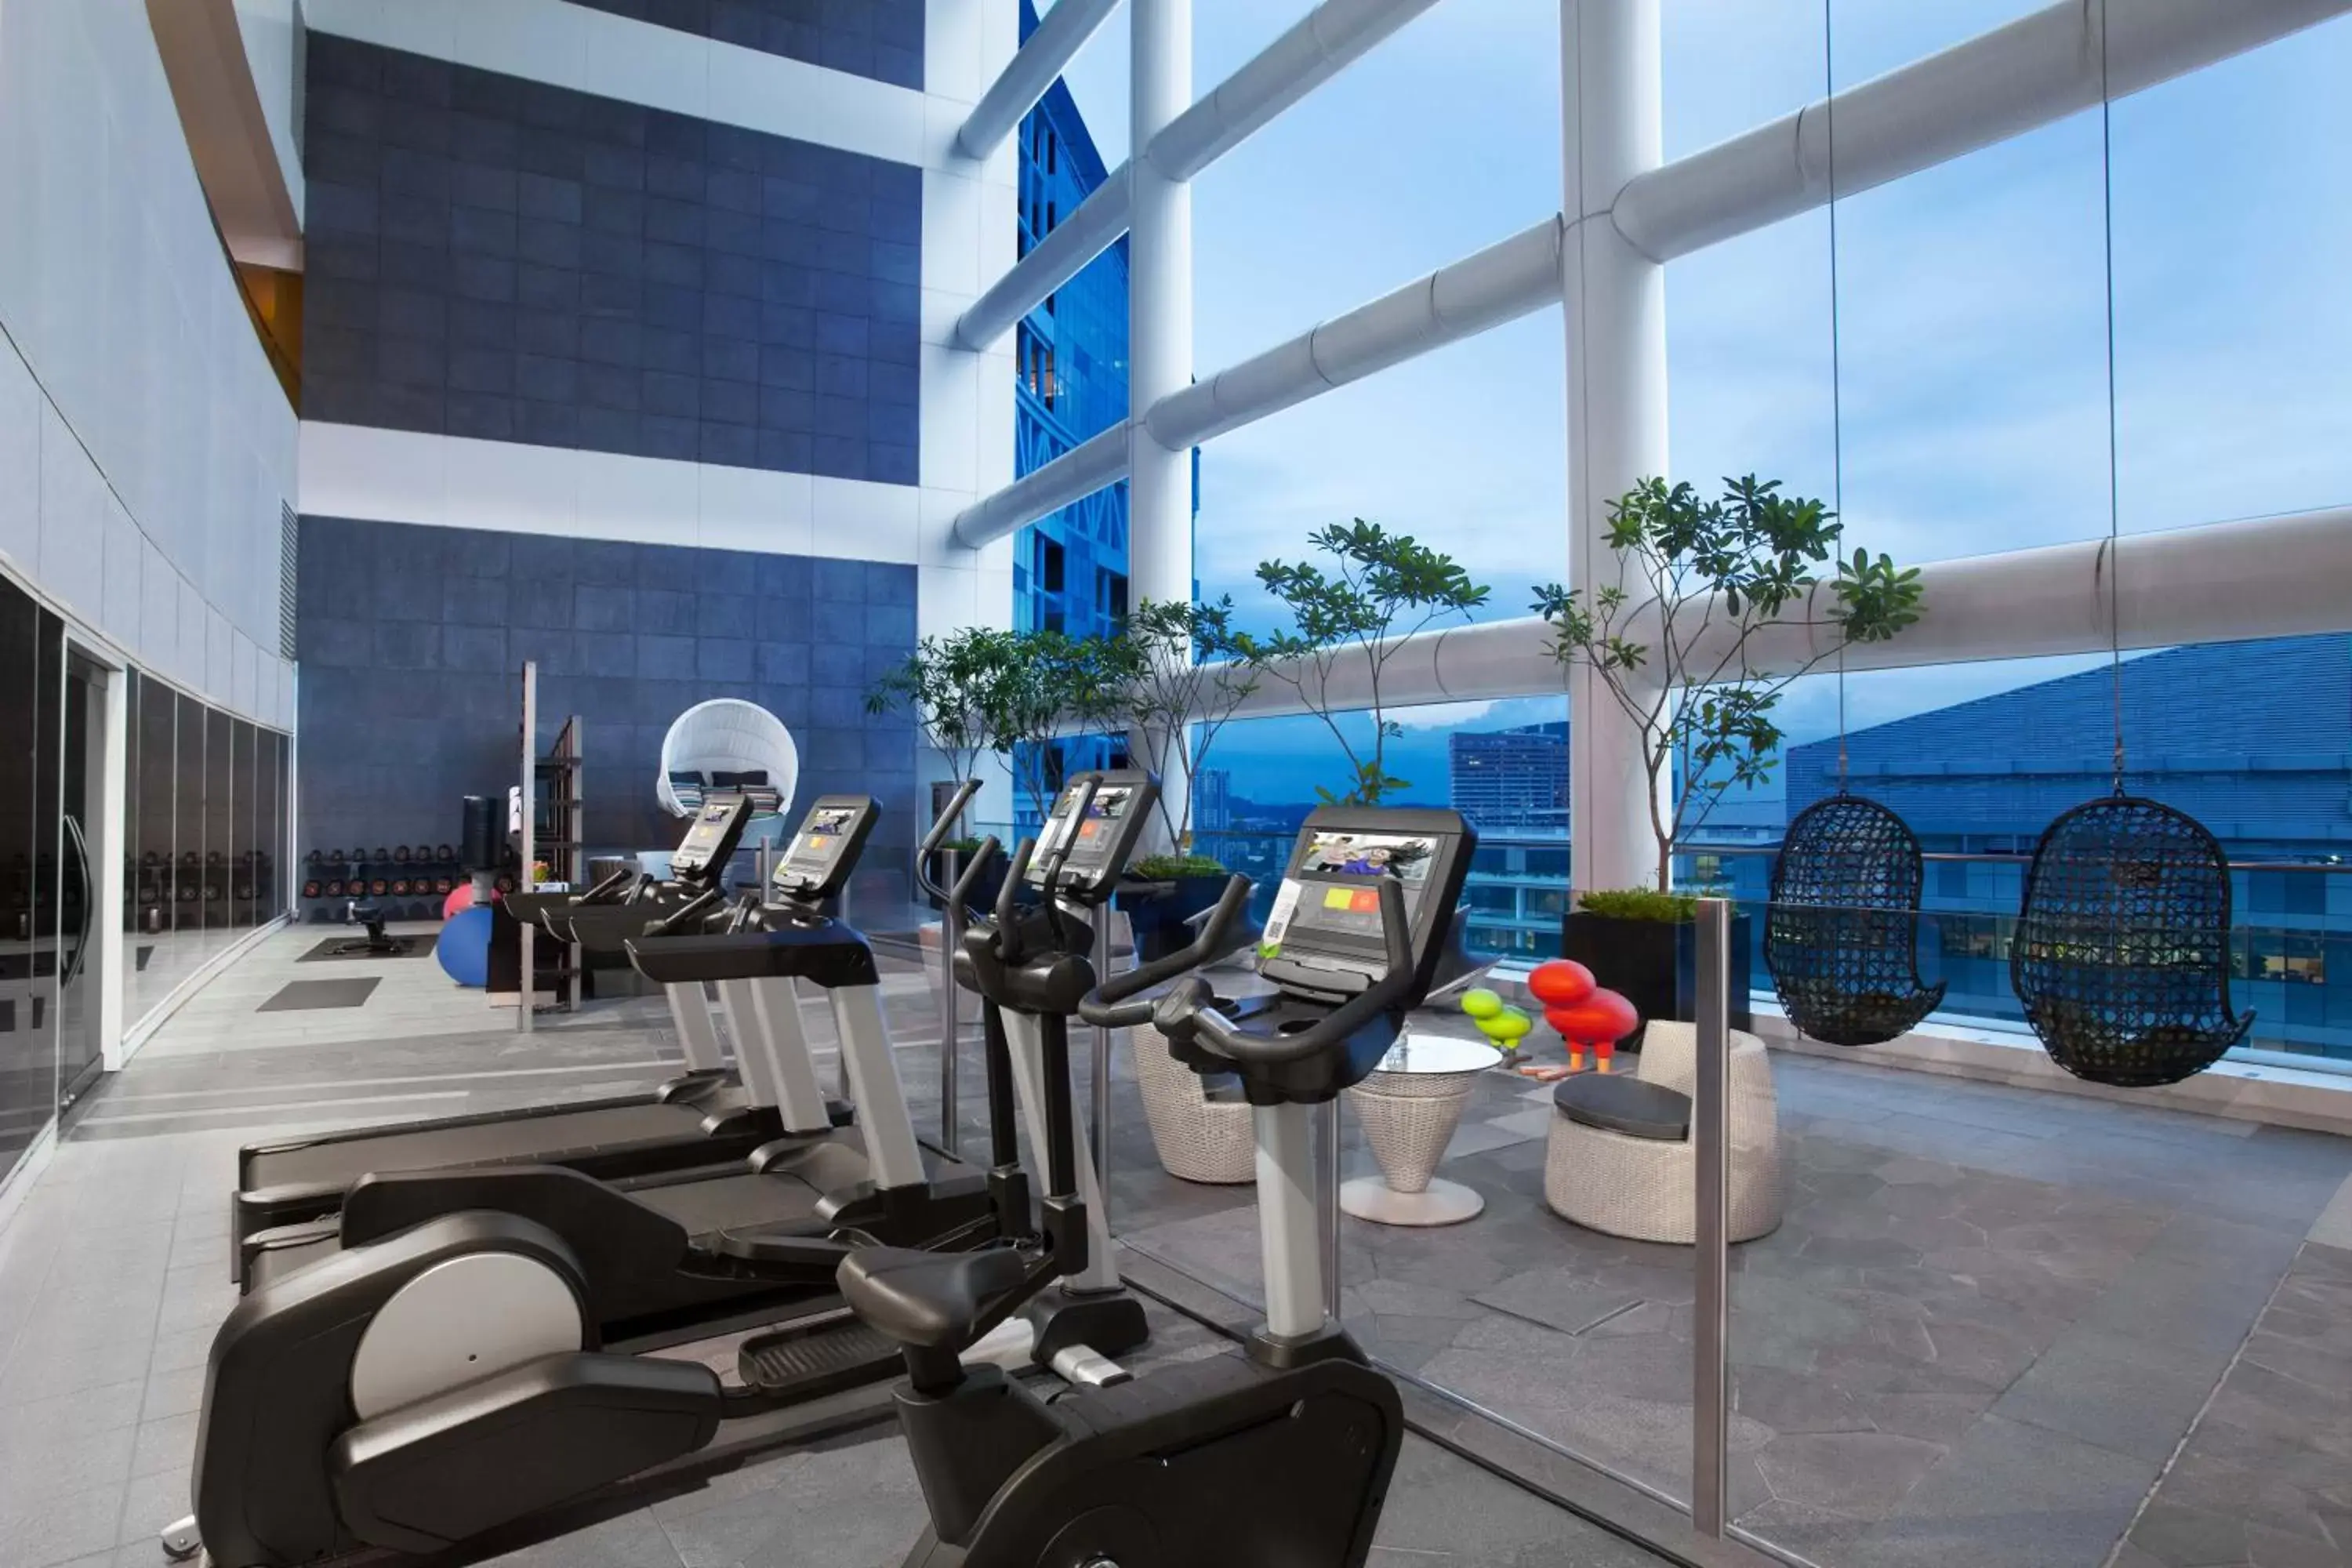 Fitness centre/facilities, Fitness Center/Facilities in Citadines Fusionopolis Singapore